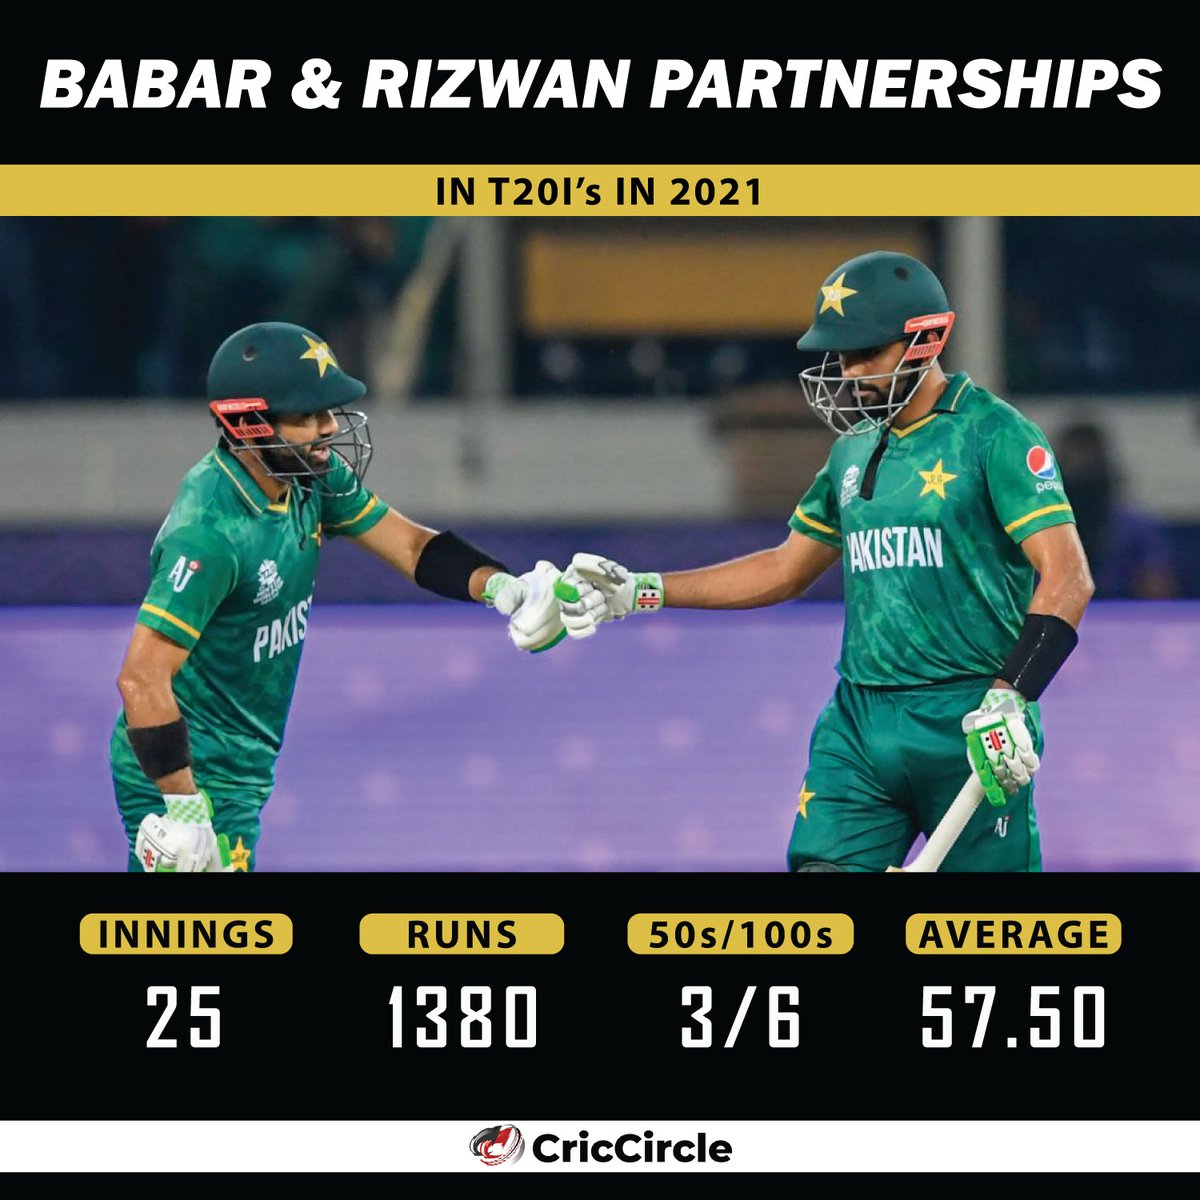 Babar & Rizwan 🤝 Partnerships in numbers in T20I's
#BabarAzam #mohammadrizwan #pakistancricket #T20I #Pakistan #PCB #T20WorldCup21 #cricket #criccircle #cricketnews